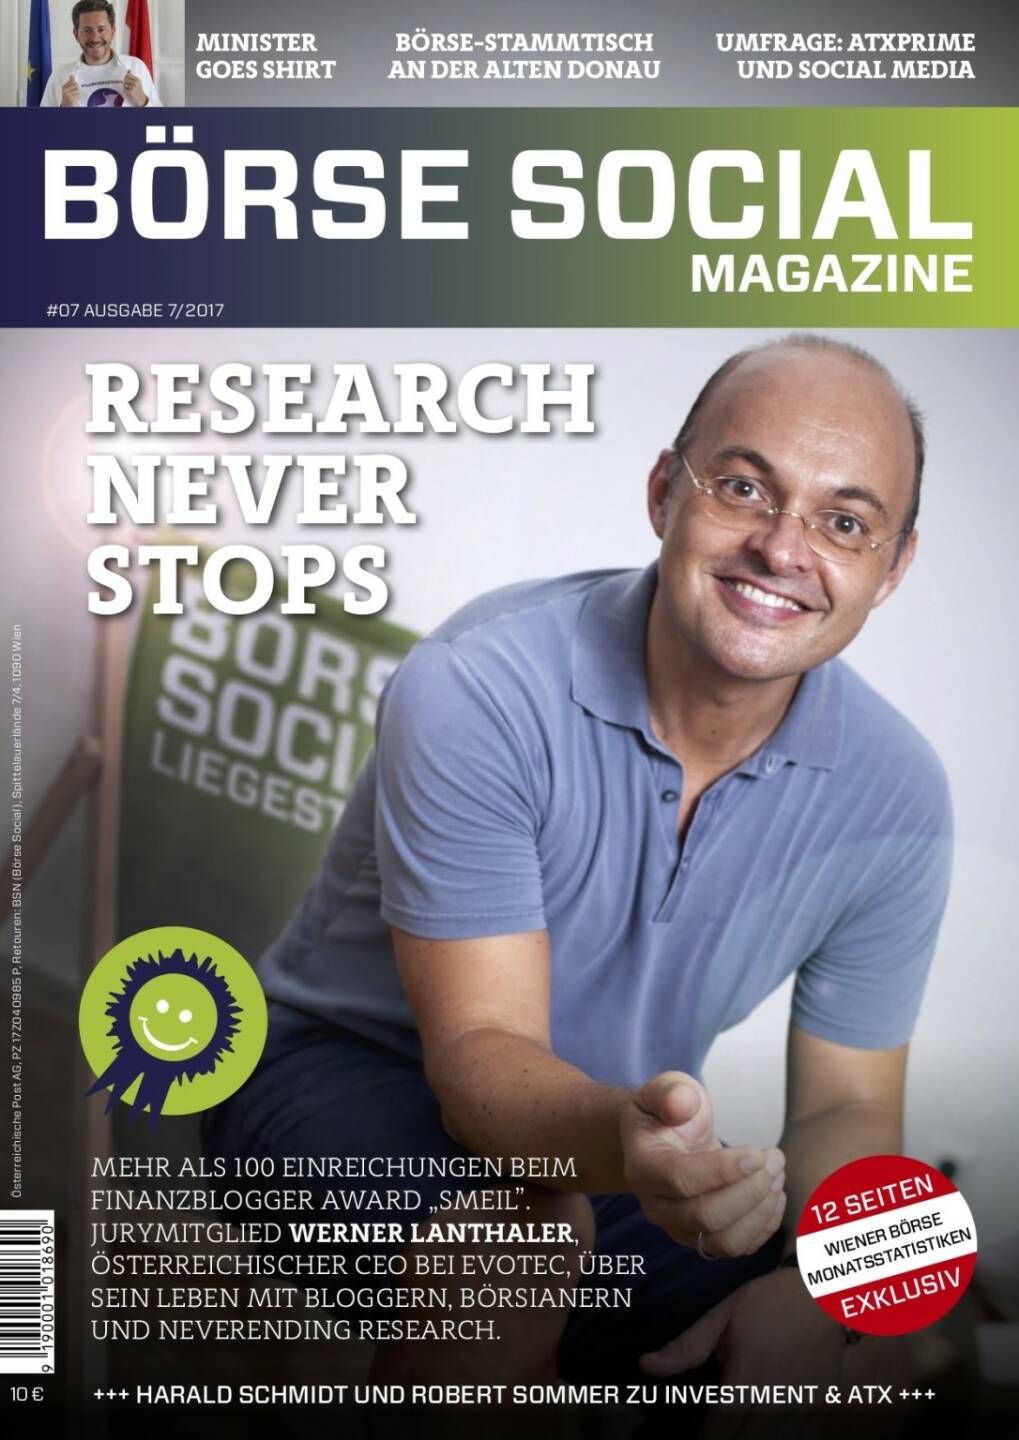 Börse Social Magazine #7 mit Werner Lanthaler, Evotec, am Cover